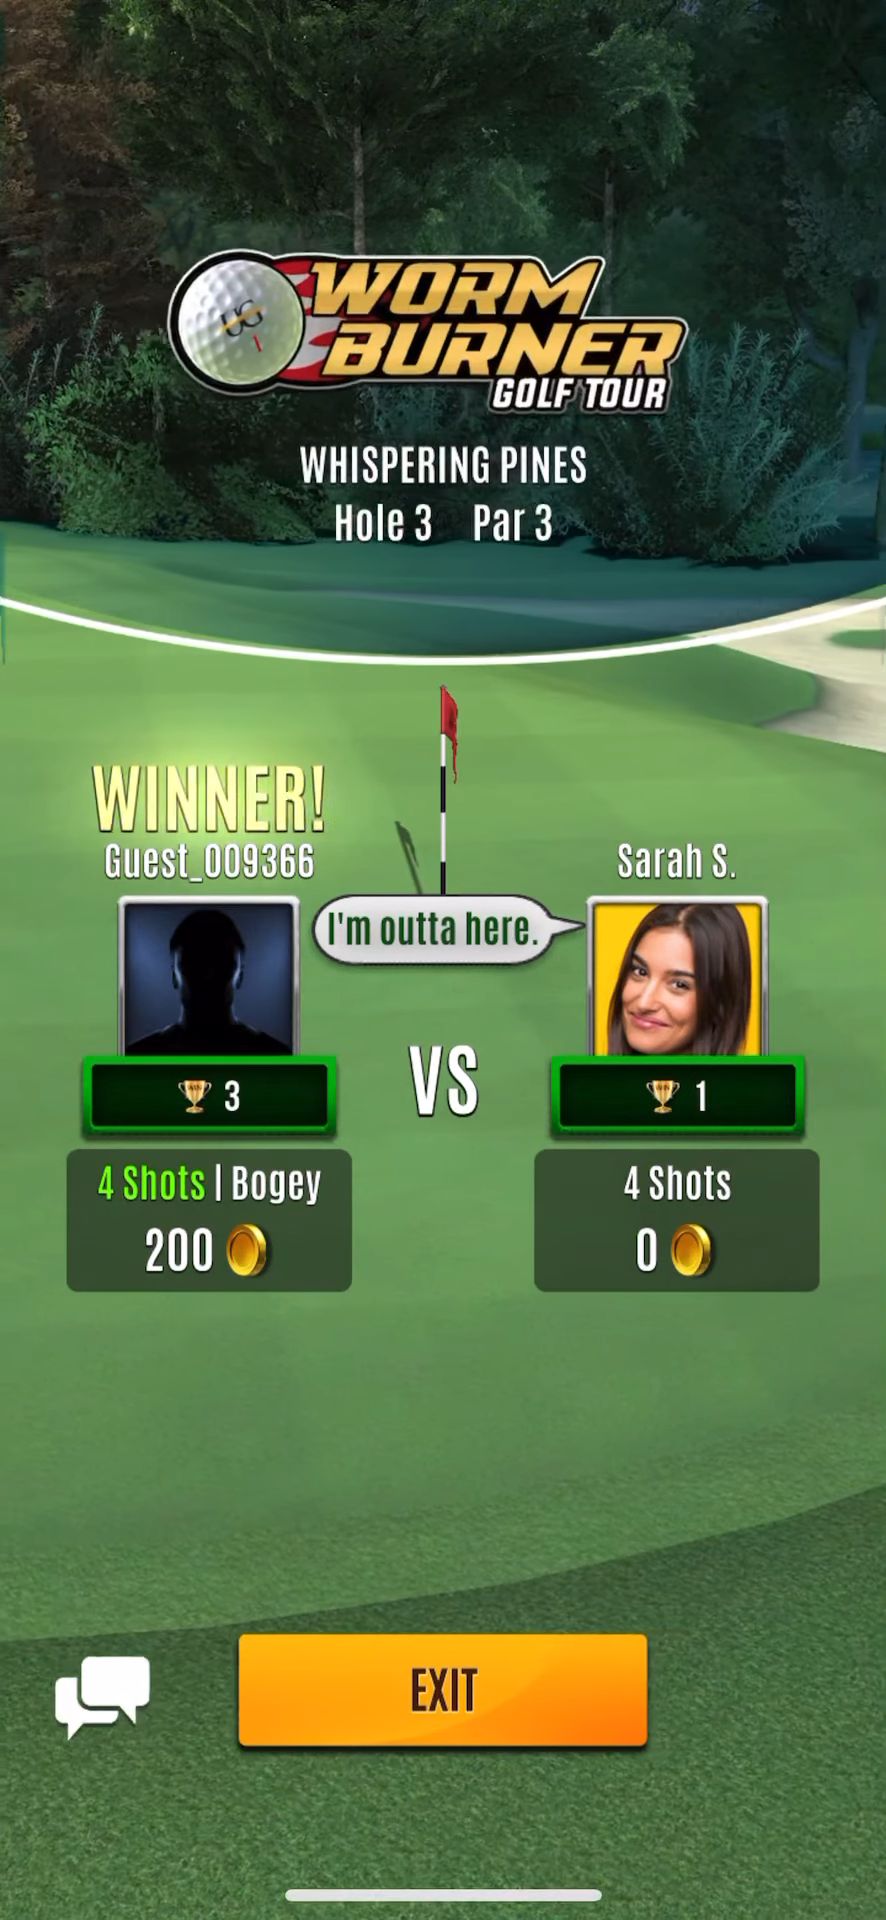 Ultimate Golf! スクリーンショット1